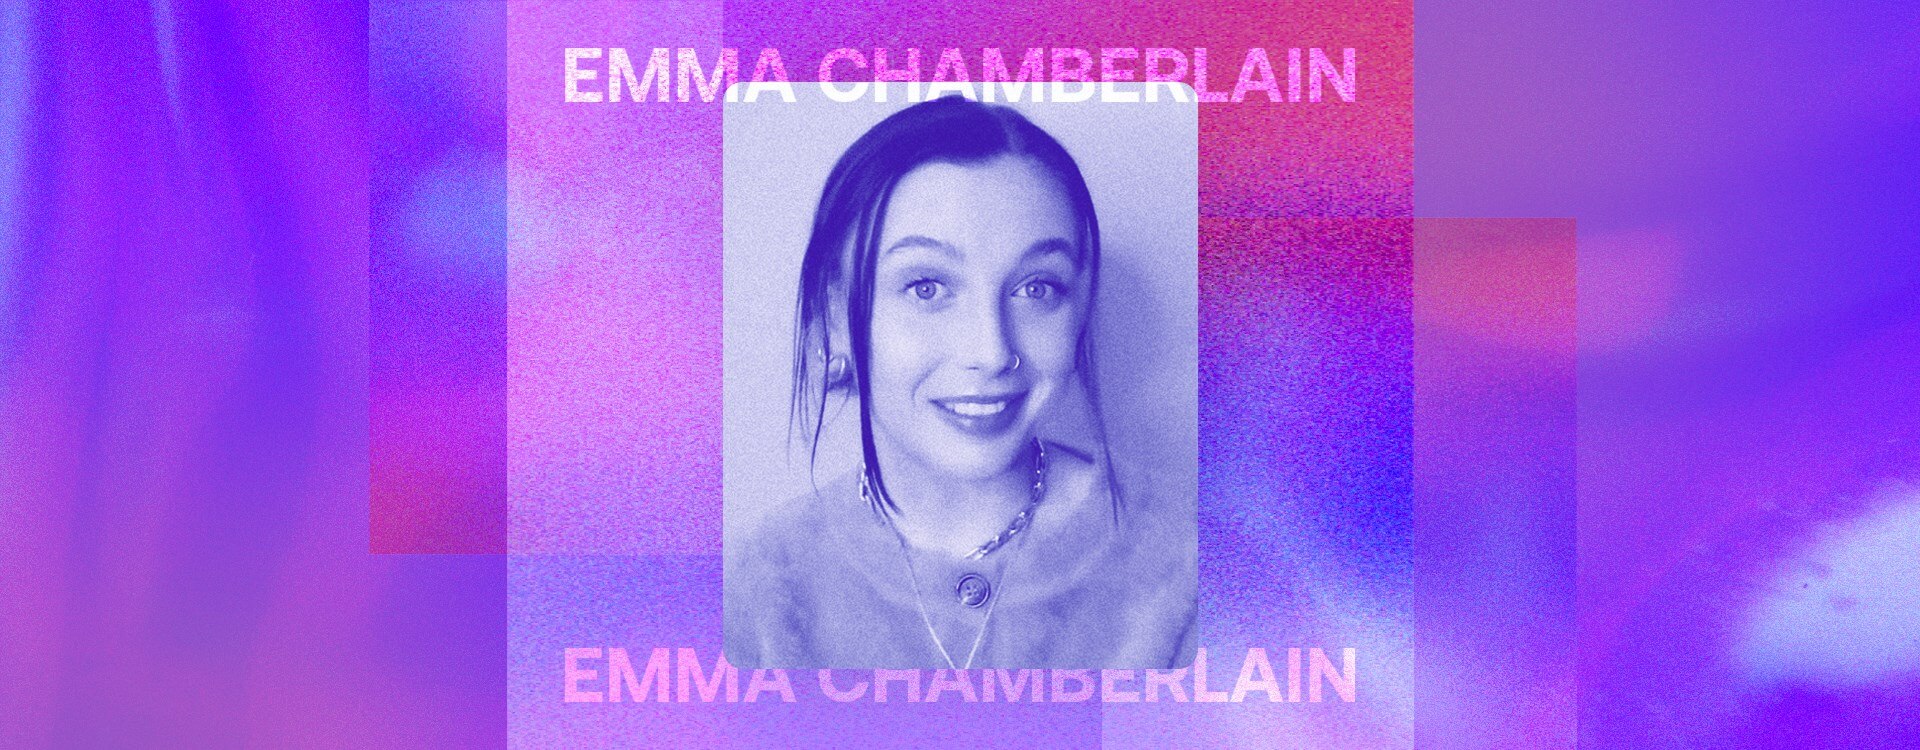 Emma Chamberlain Youtube Channel